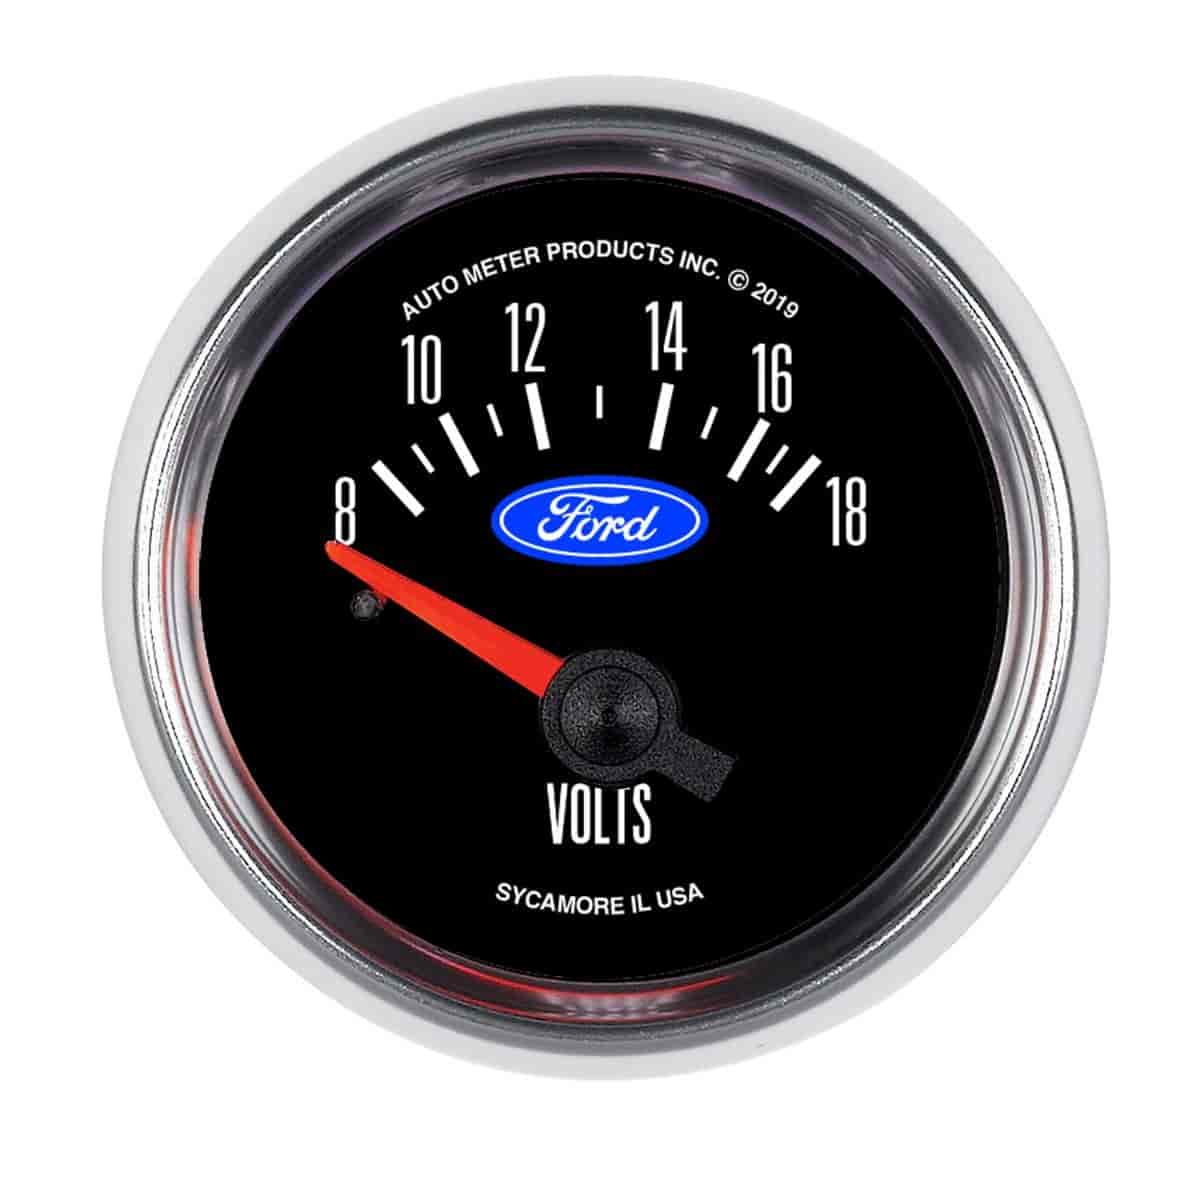 Officially-Licensed Ford Voltmeter 2 1/16 in., 8-18 V, Electrical (Short Sweep)